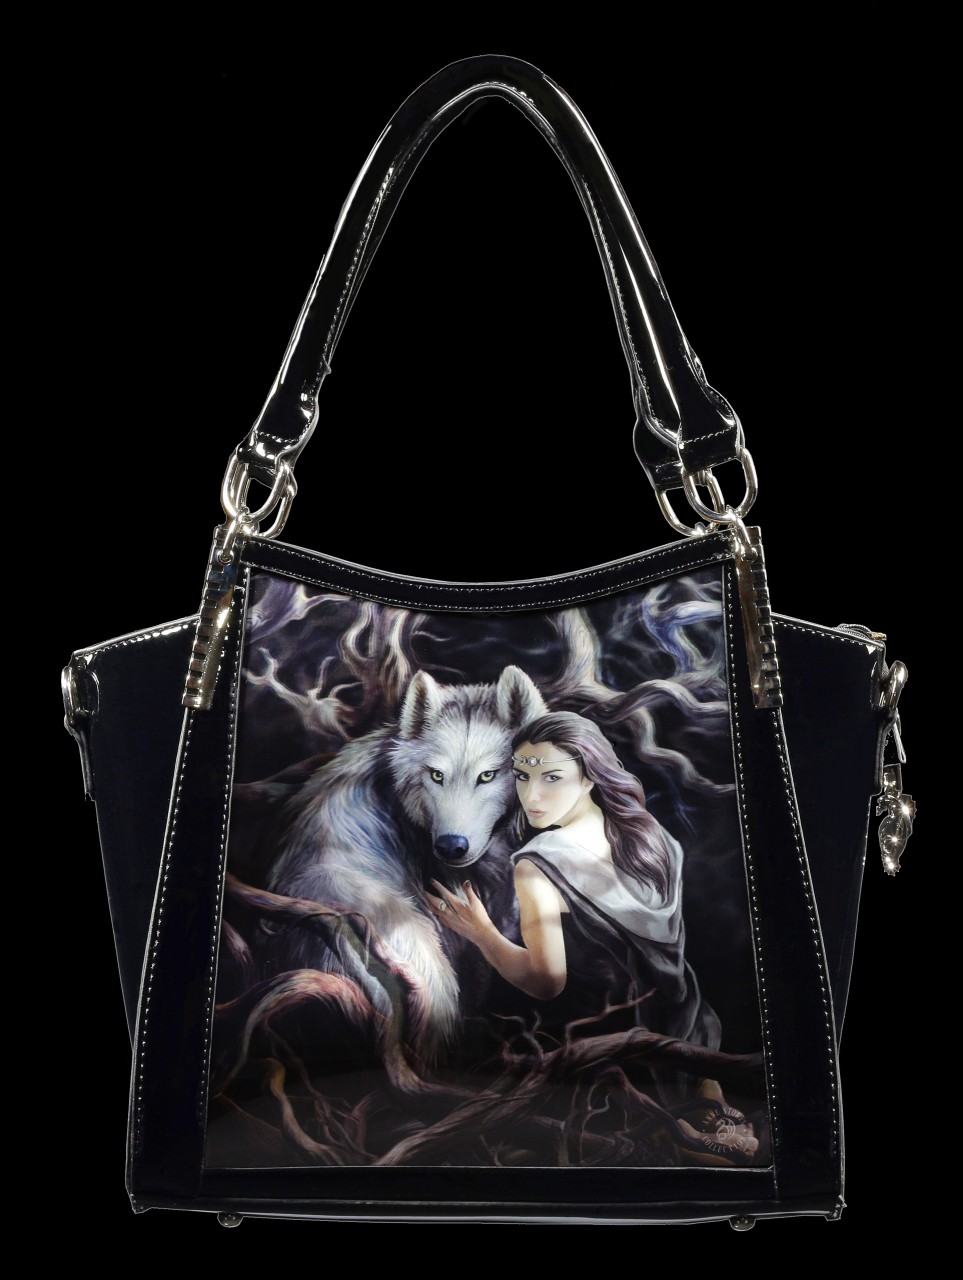 3D Fantasy Handbag with Wolf - Soul Bond